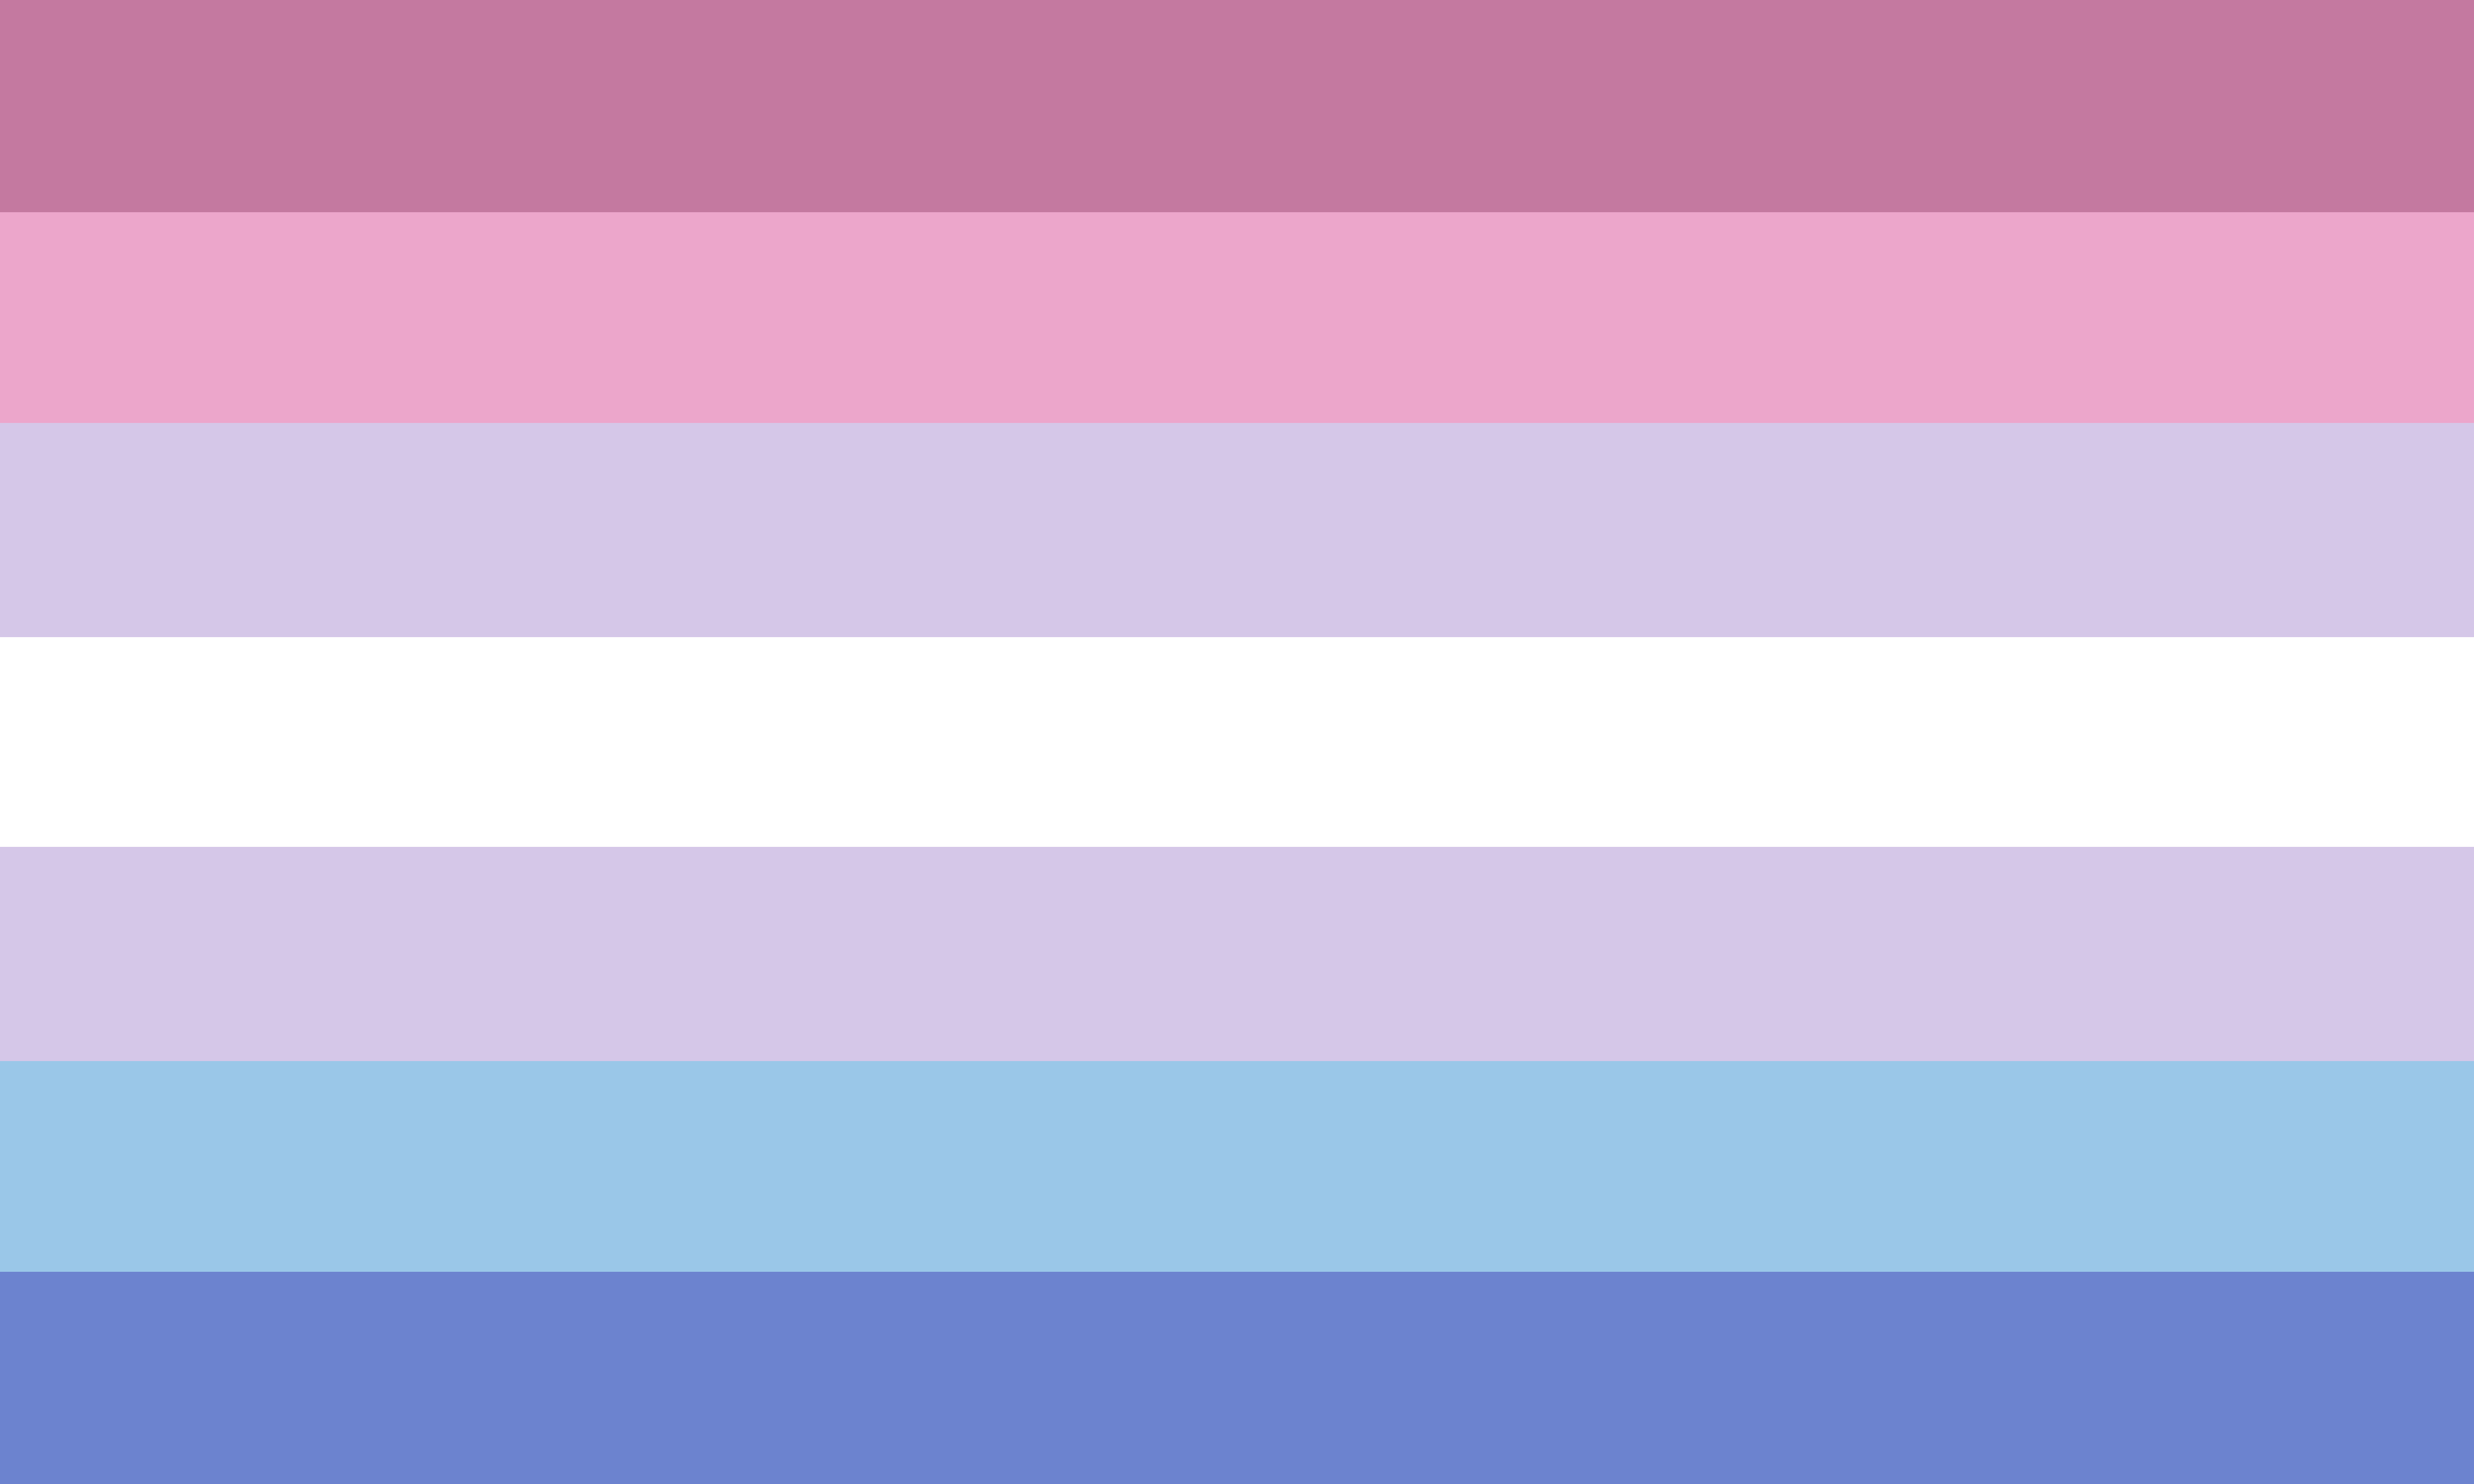 pink blue gay flag